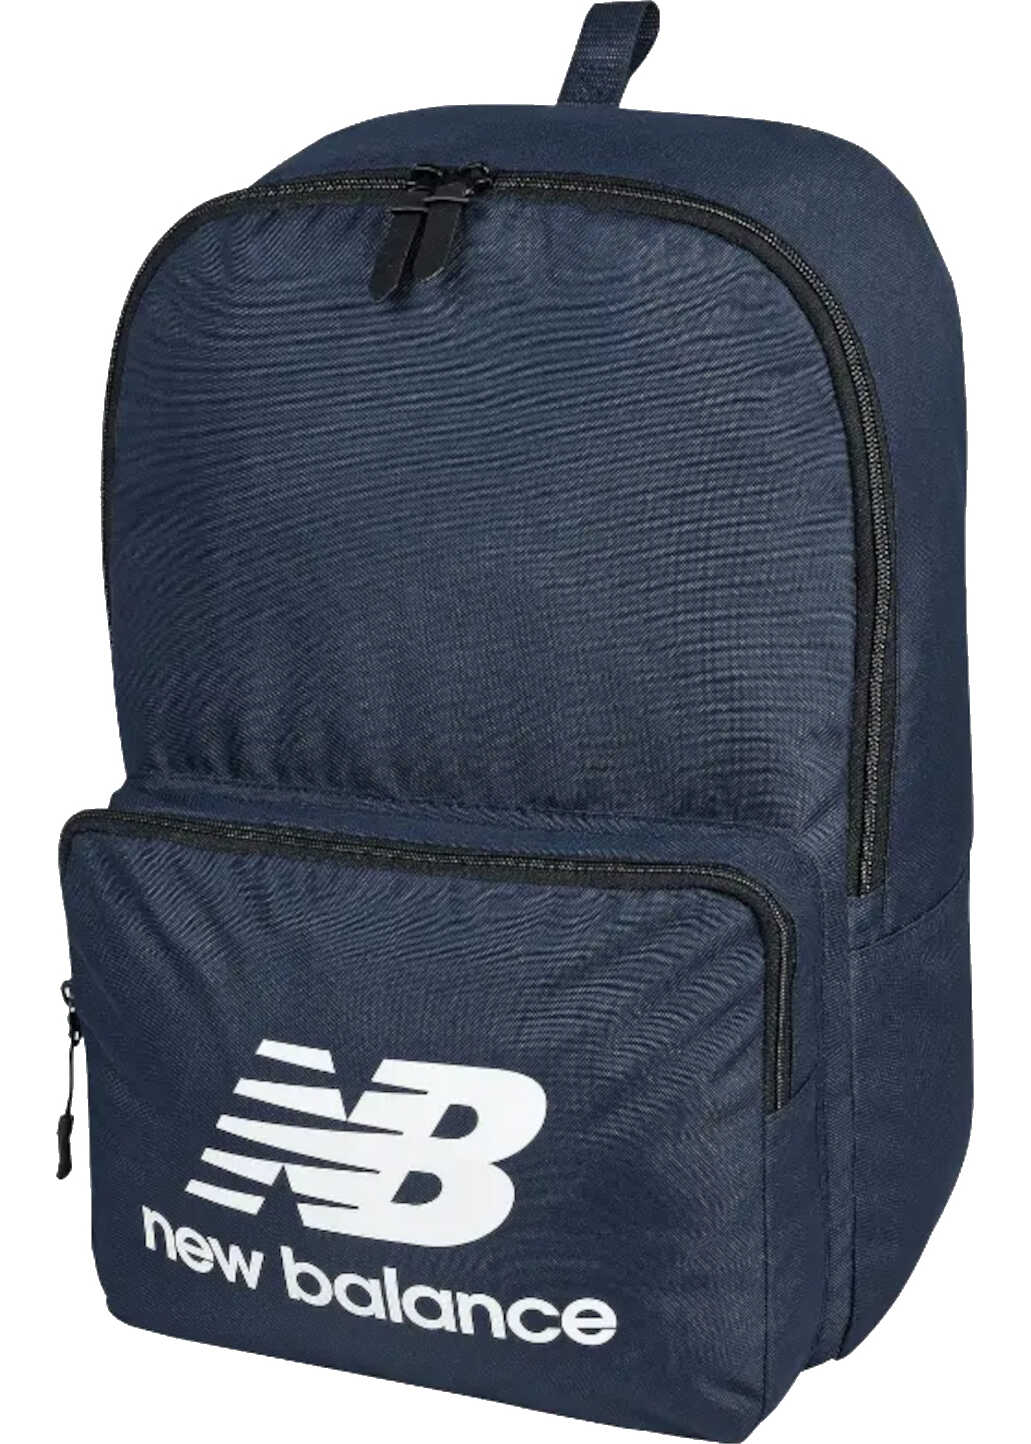 New Balance Classics Backpack Navy